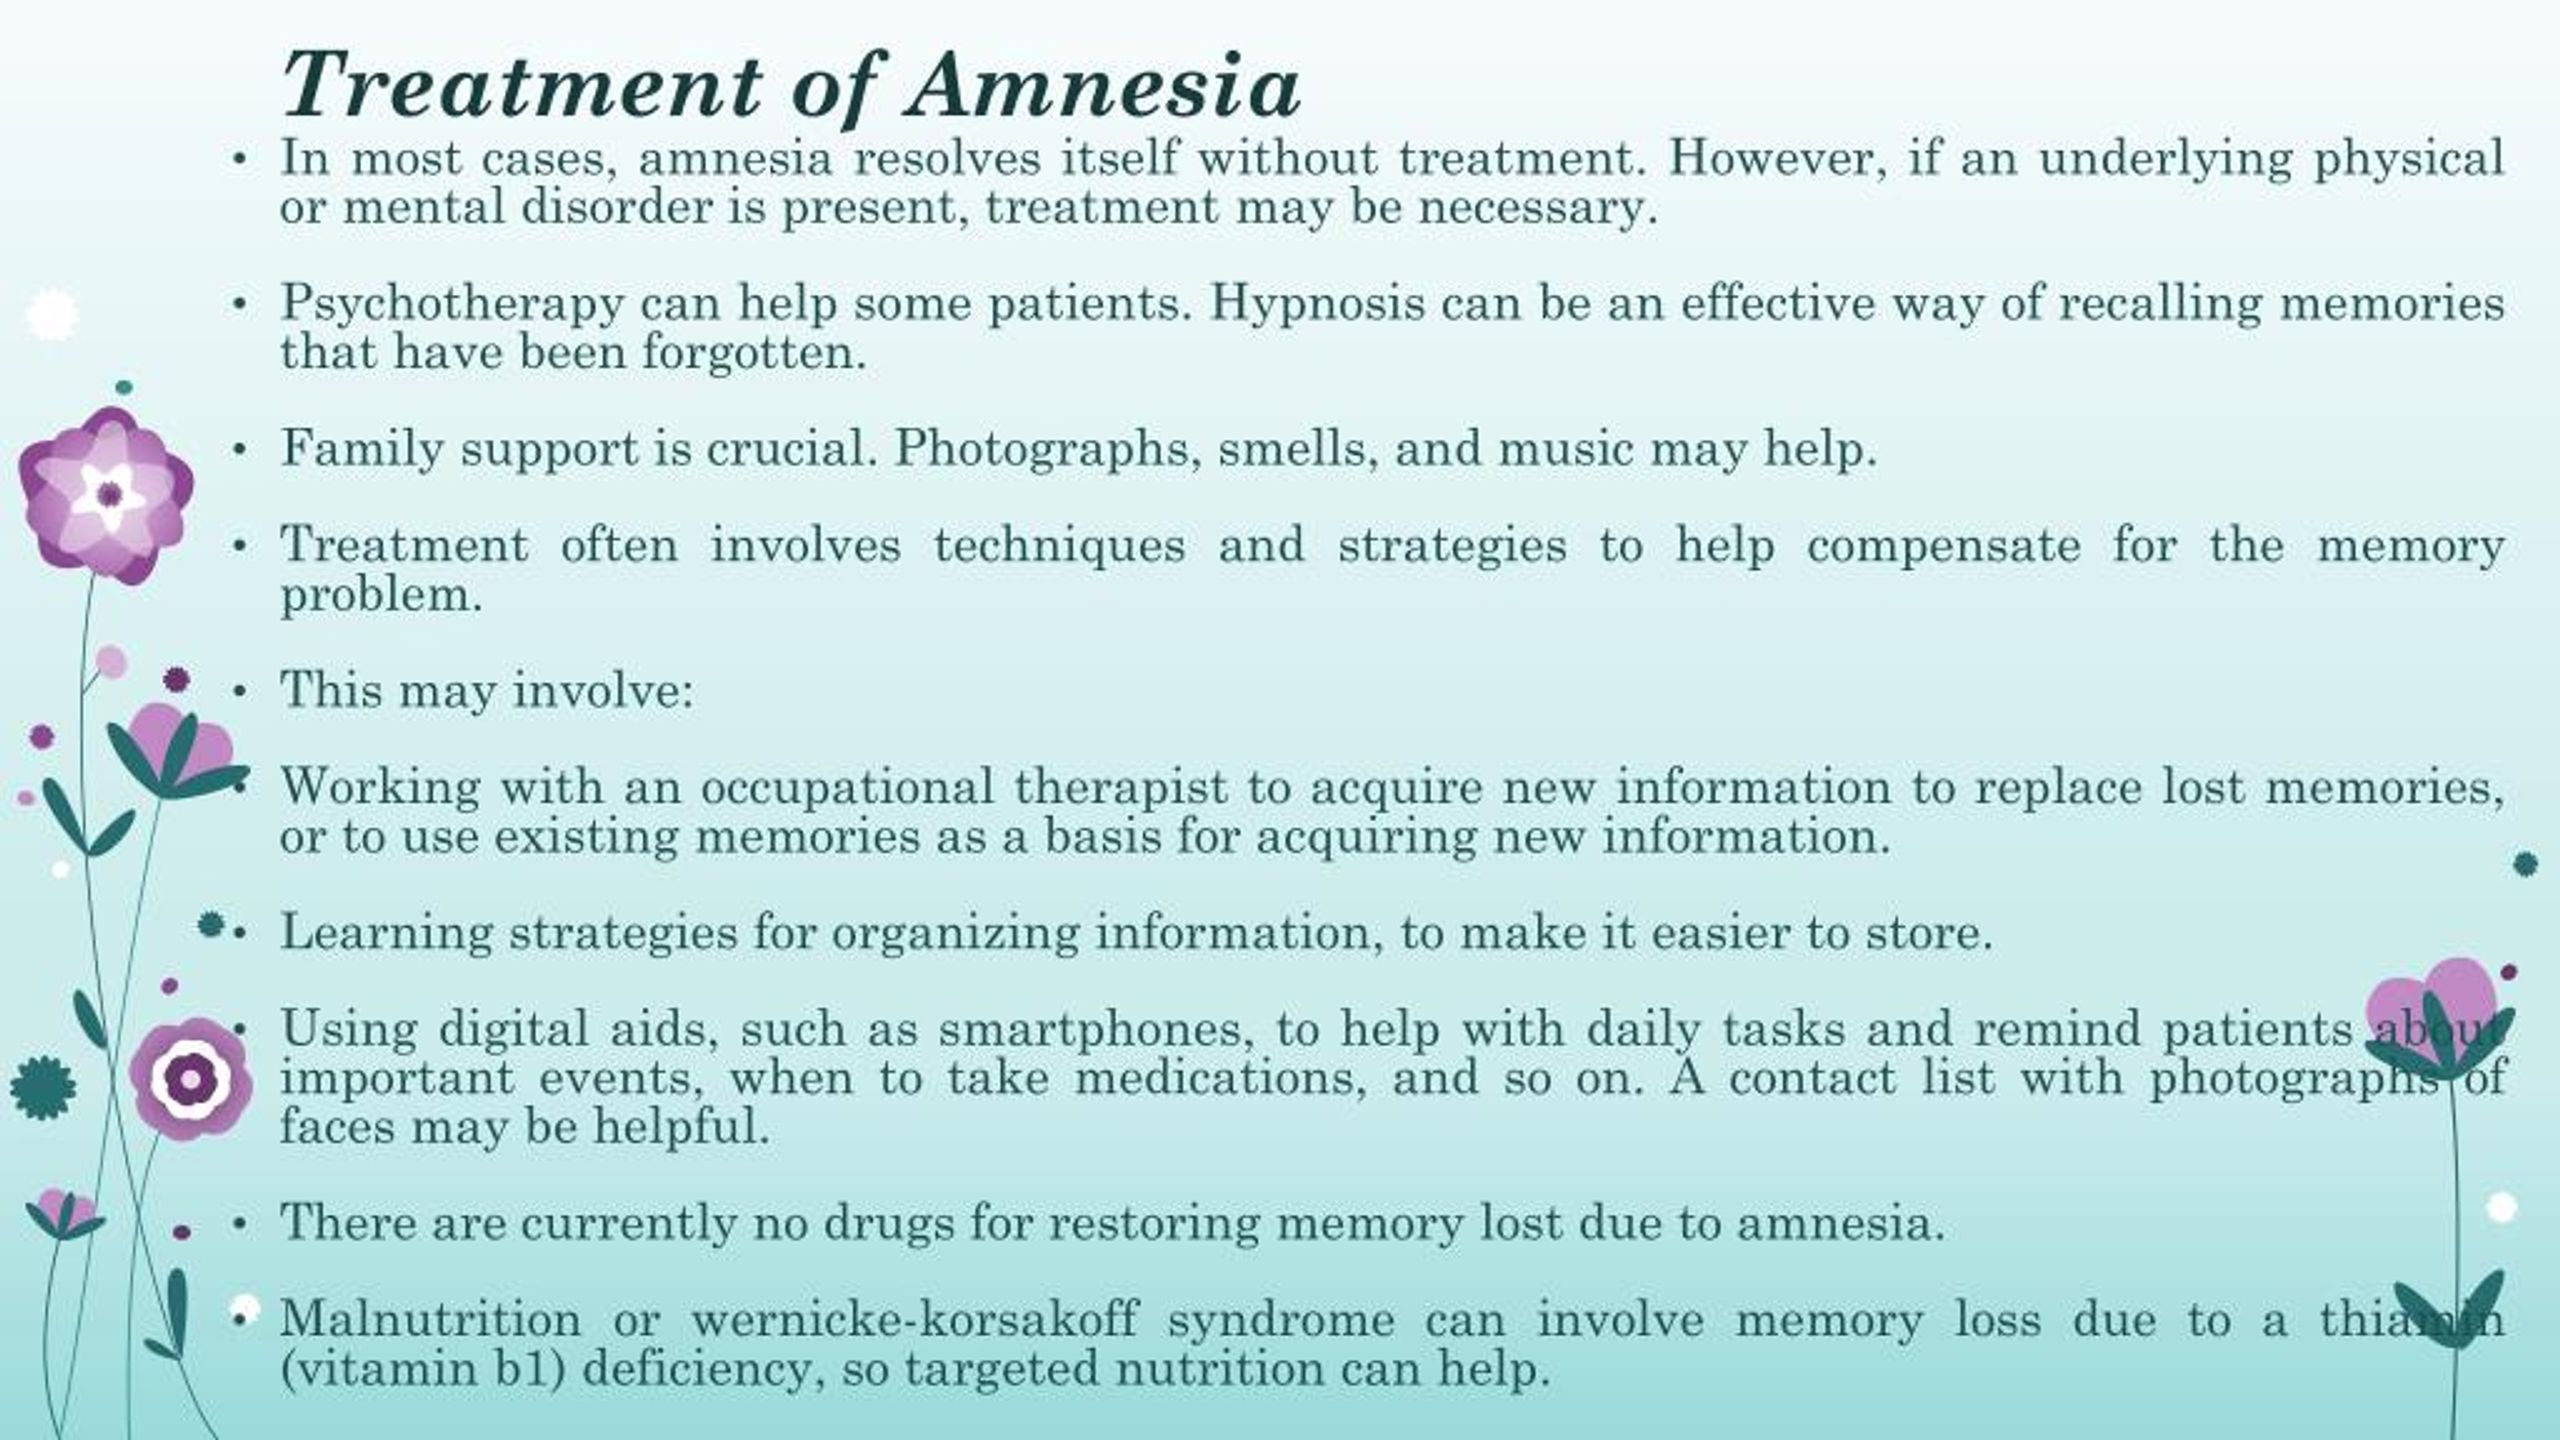 both types of amnesia